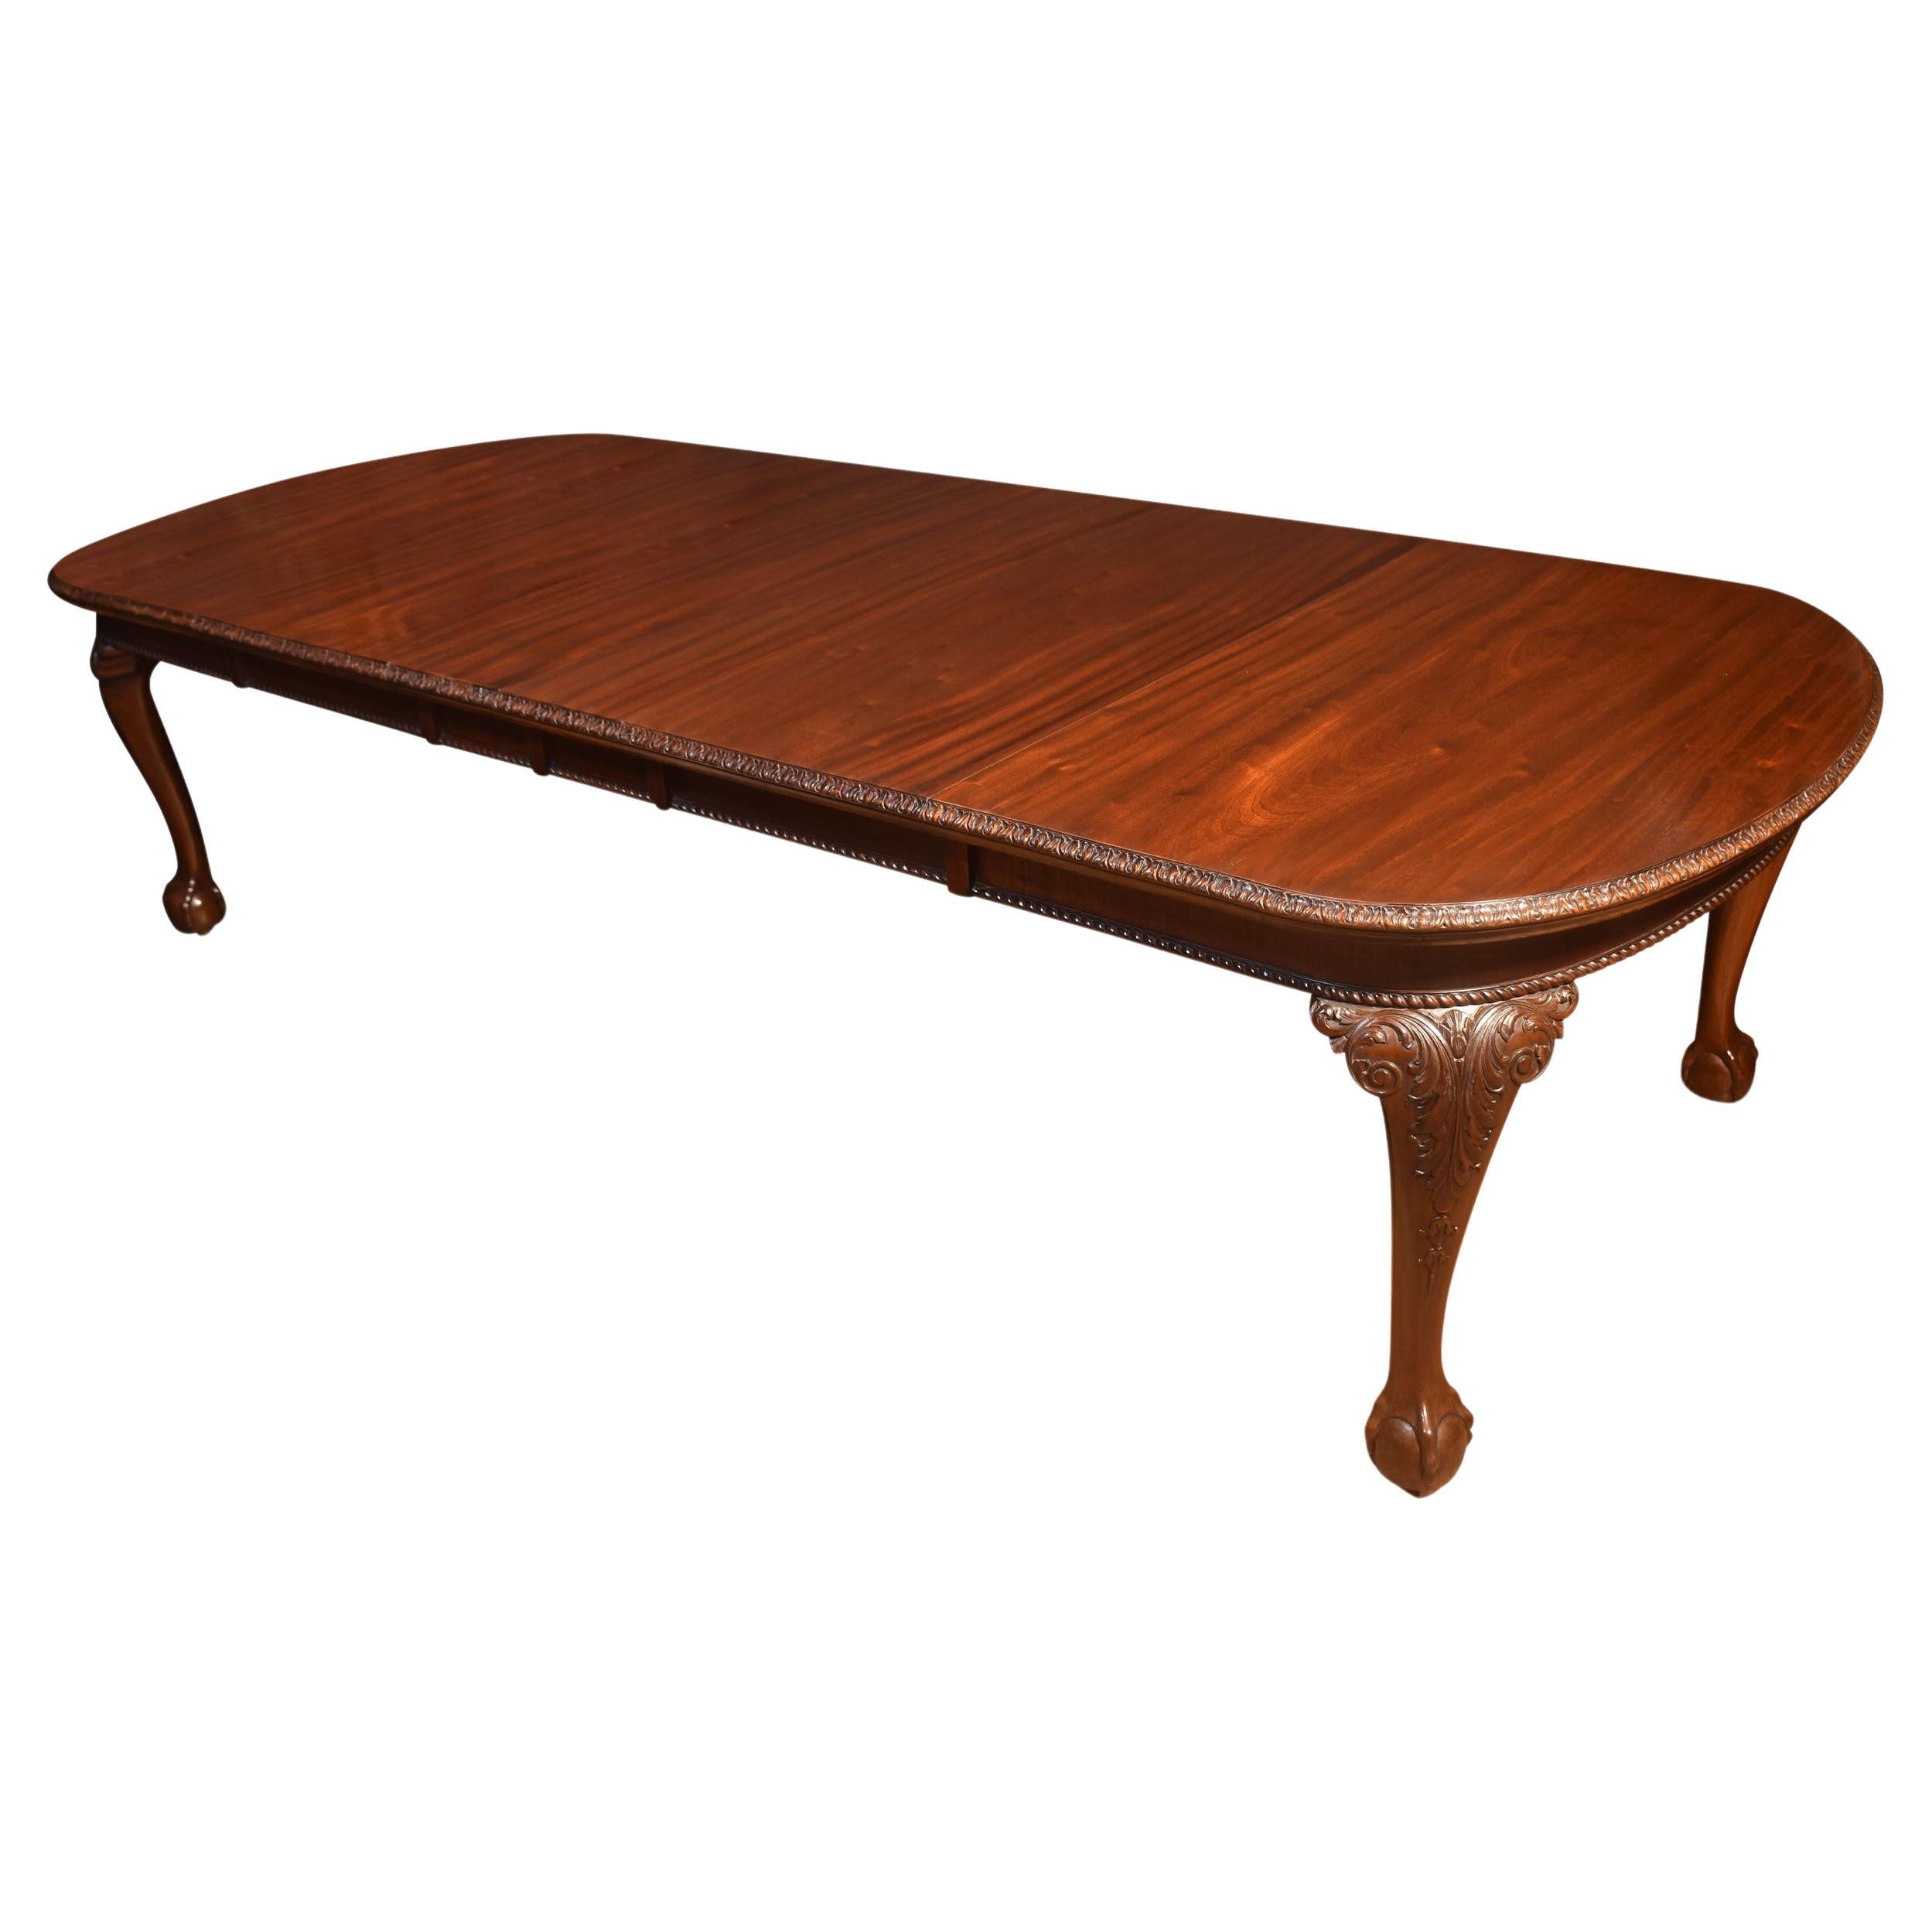 Large mahogany dining table